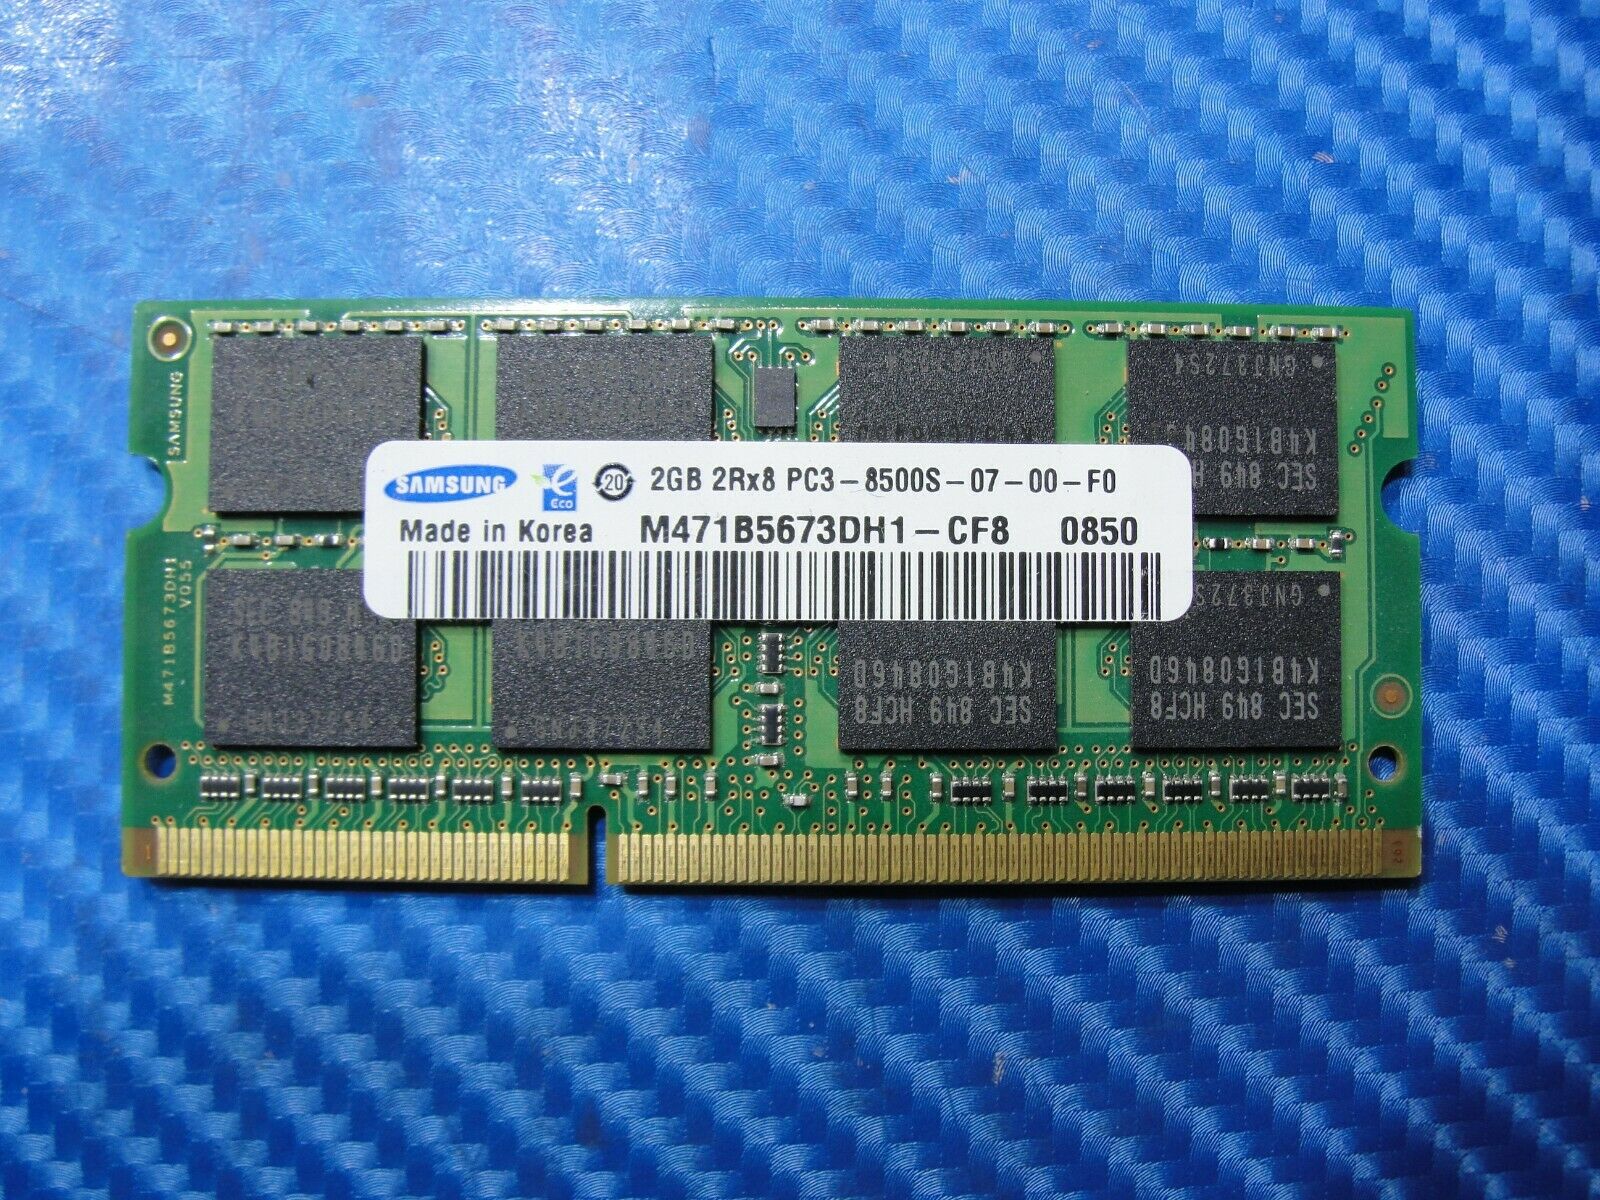 Apple A1286 Samsung 2GB 2Rx8 PC3-8500S SO-DIMM Memory RAM M471B5673DH1-CF8 #1 Apple